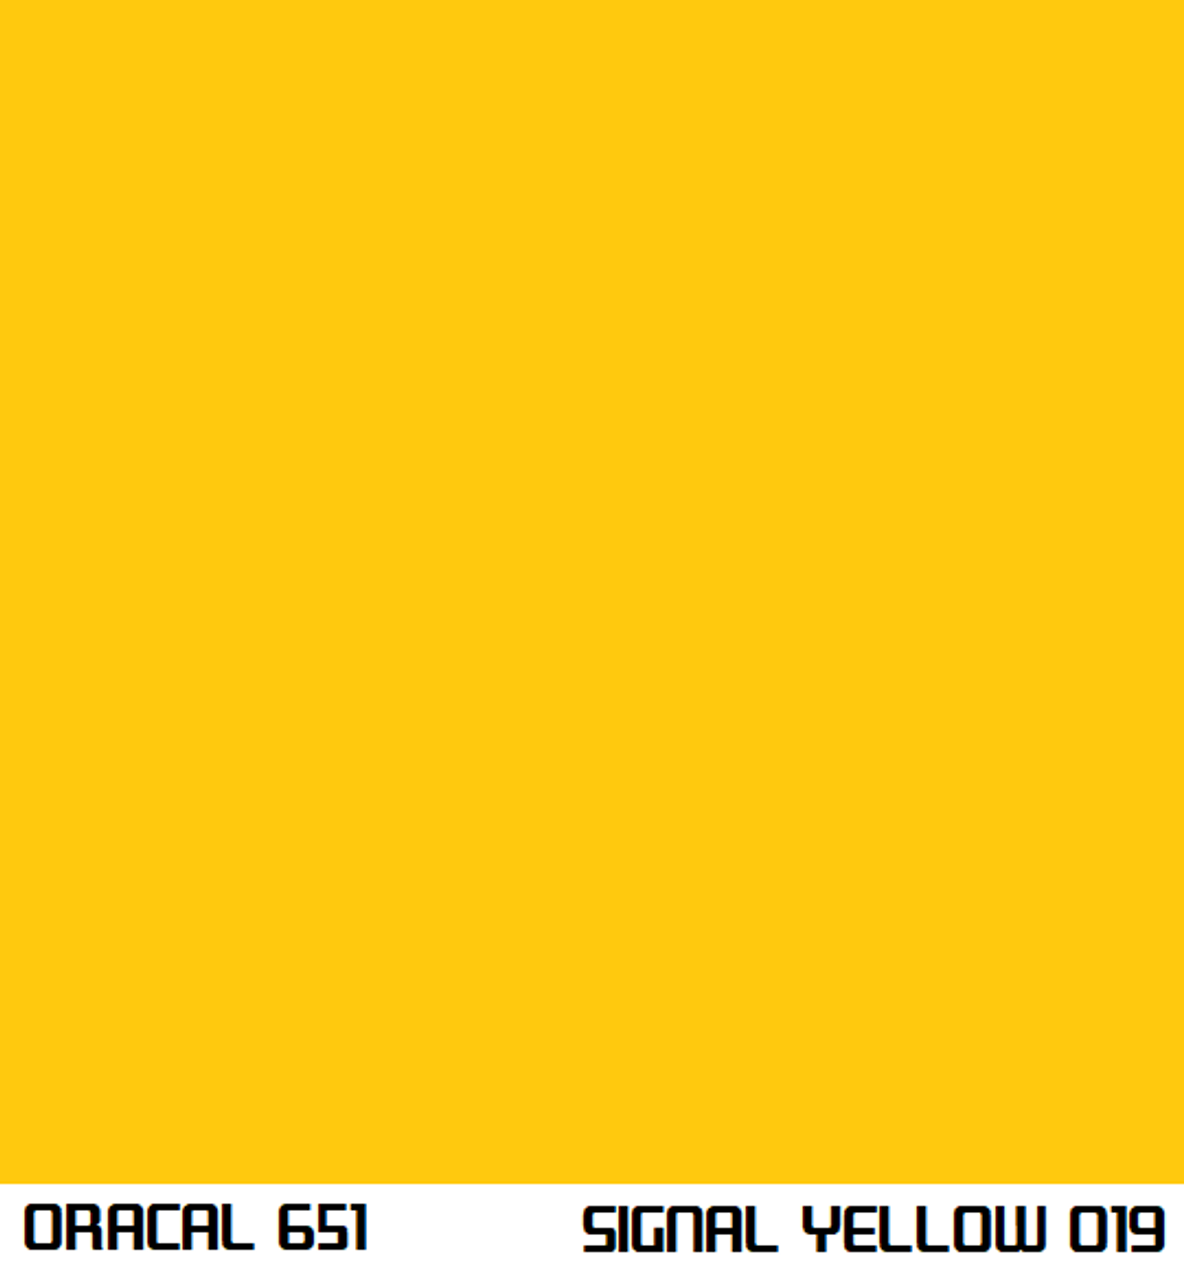 Oracal 651 Permanent Adhesive Vinyl Gloss - Signal Yellow 019 - JDMFV WRAPS